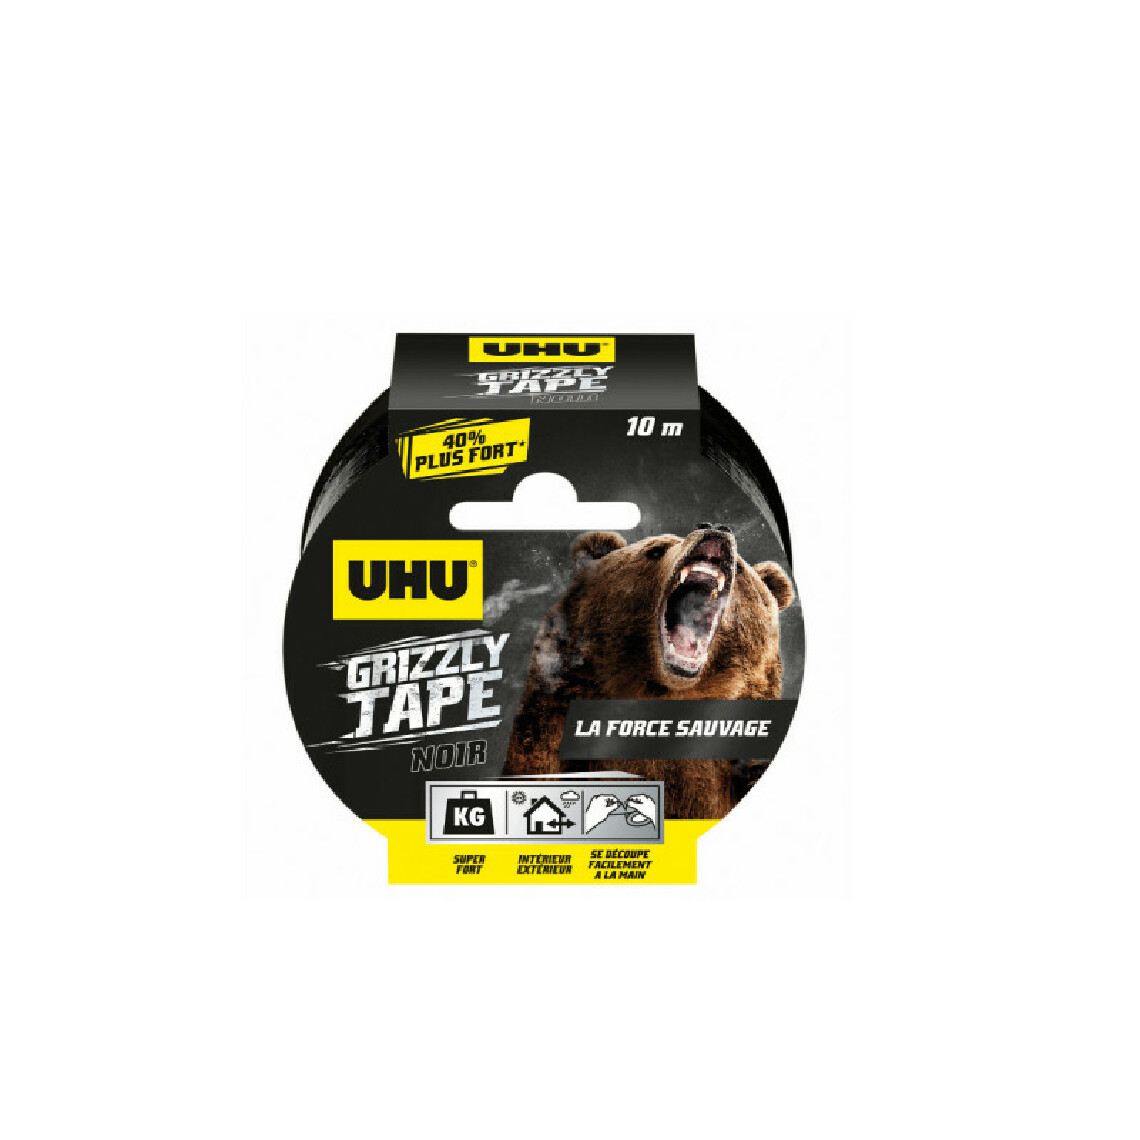 Uhu - Ruban adhésif UHU Grizzly Tape Noir - 10m - 34555 - Adhésif d'emballage